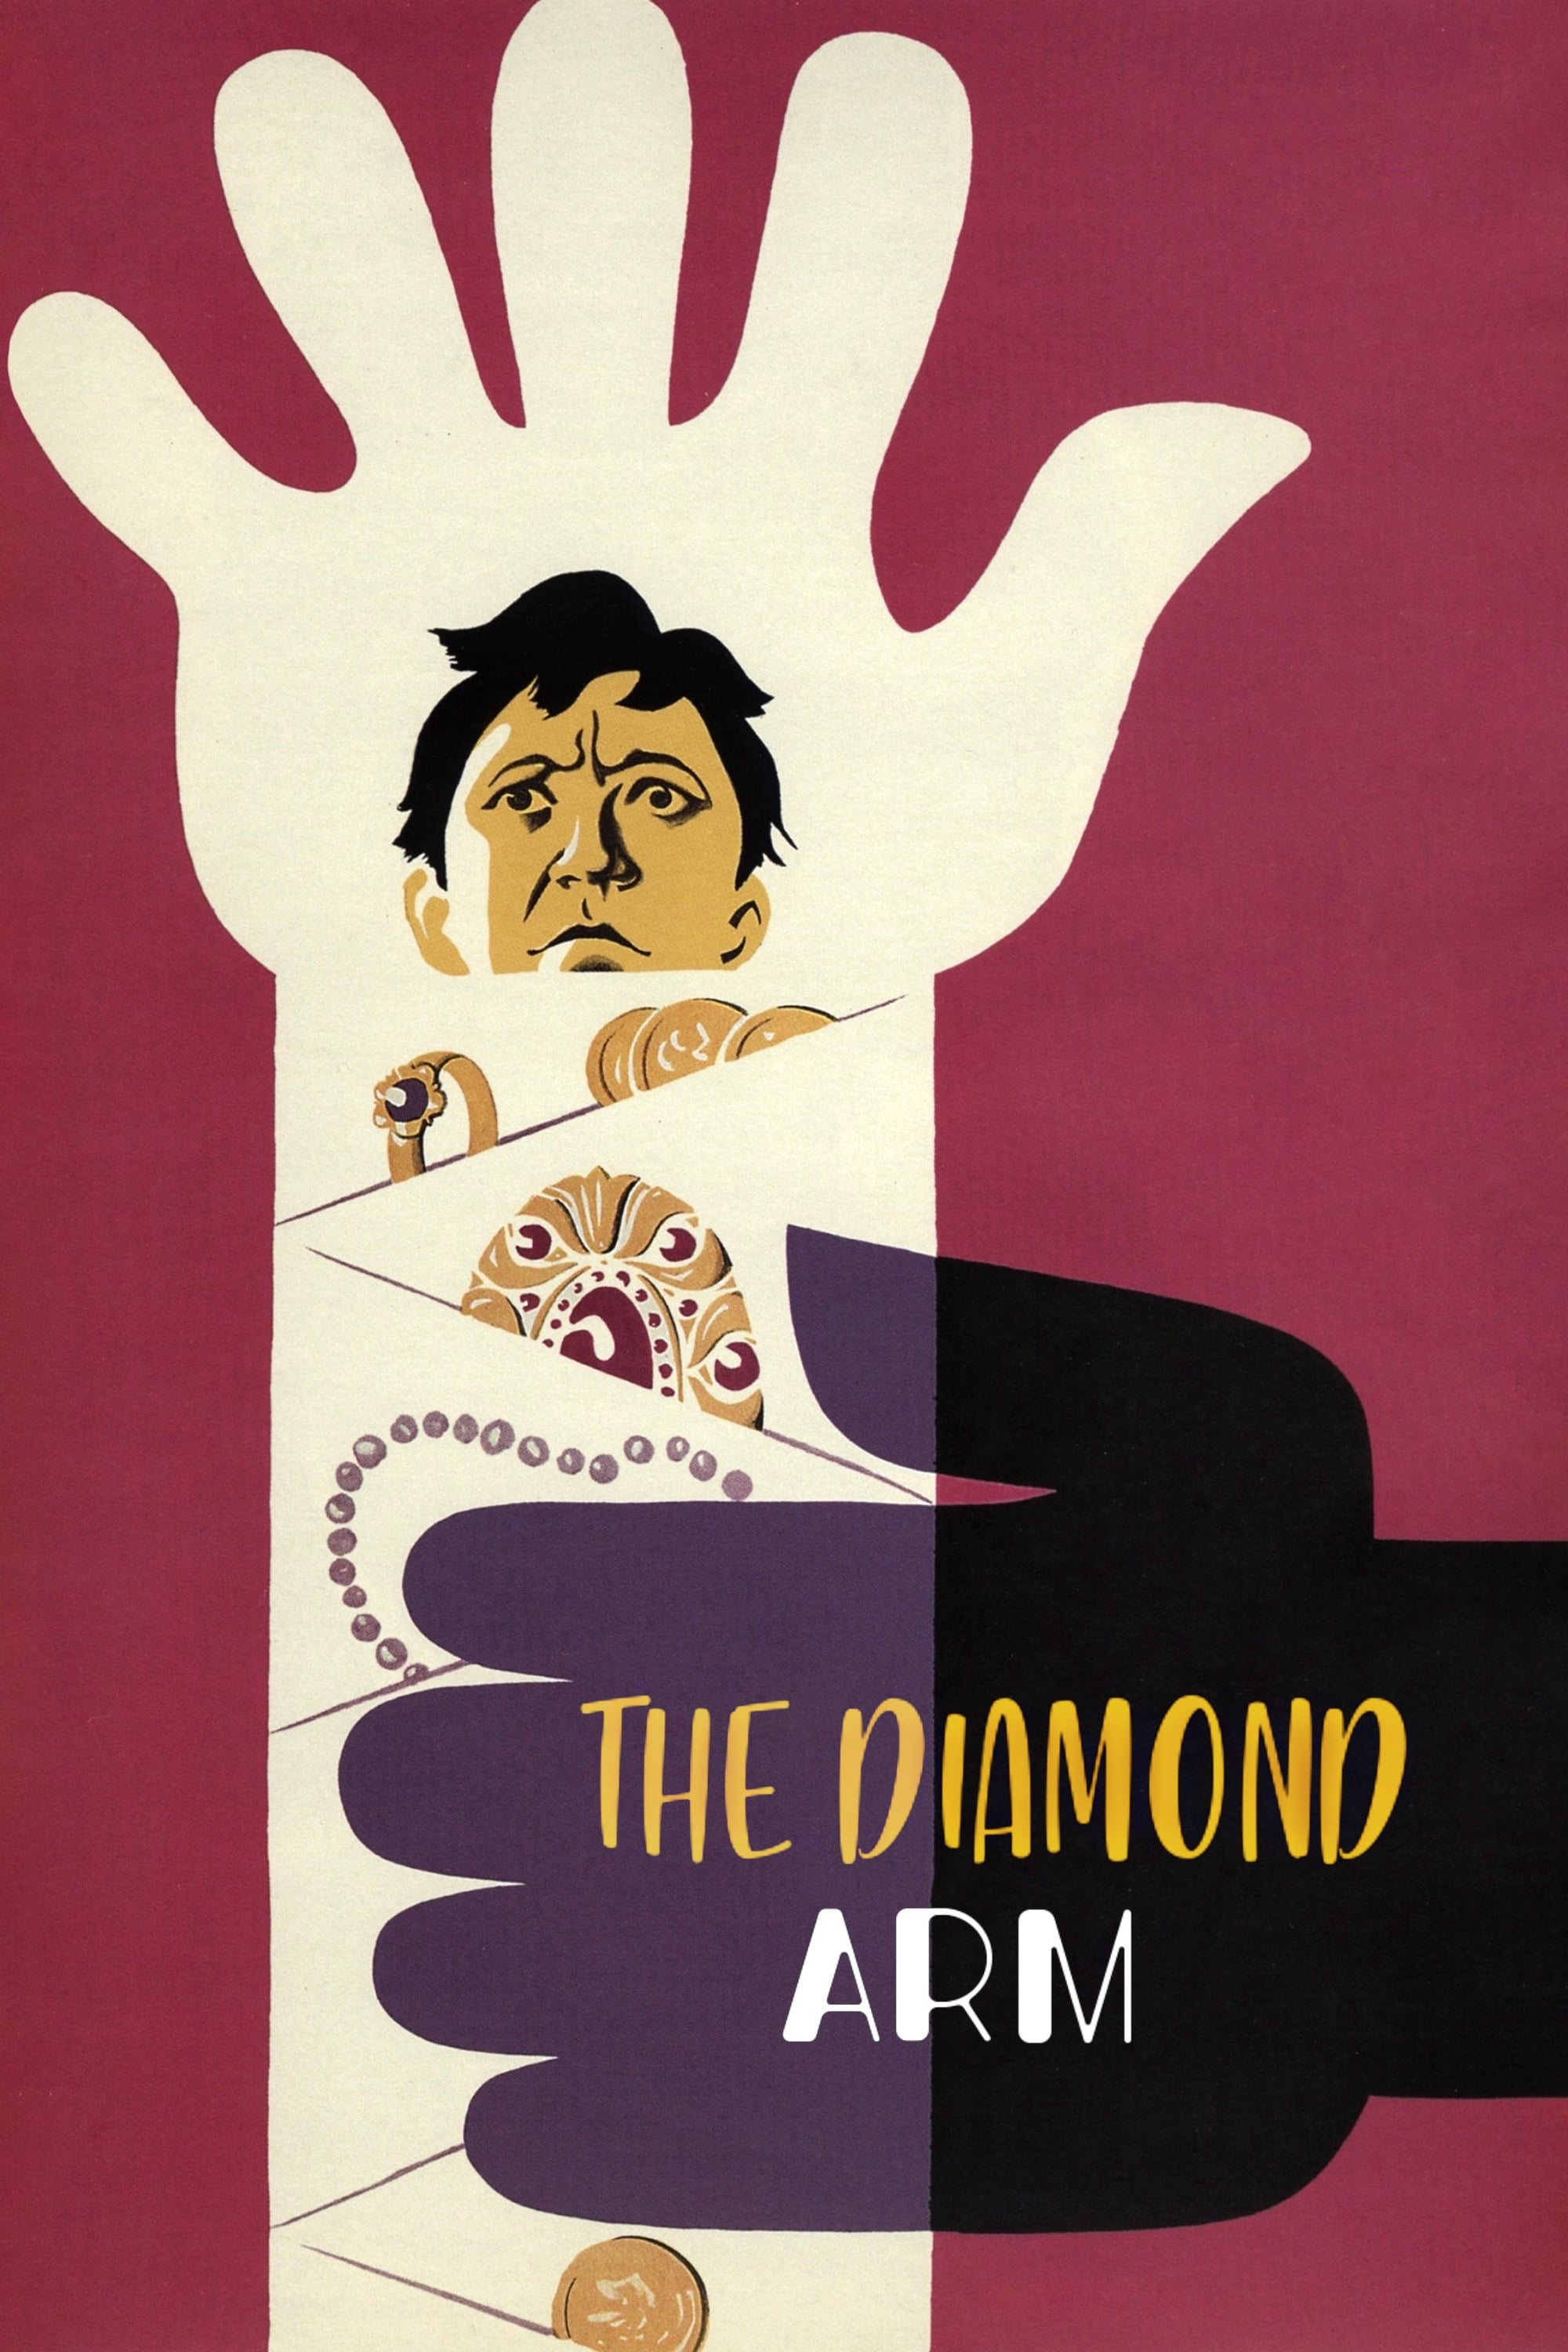 The Diamond Arm (1968)